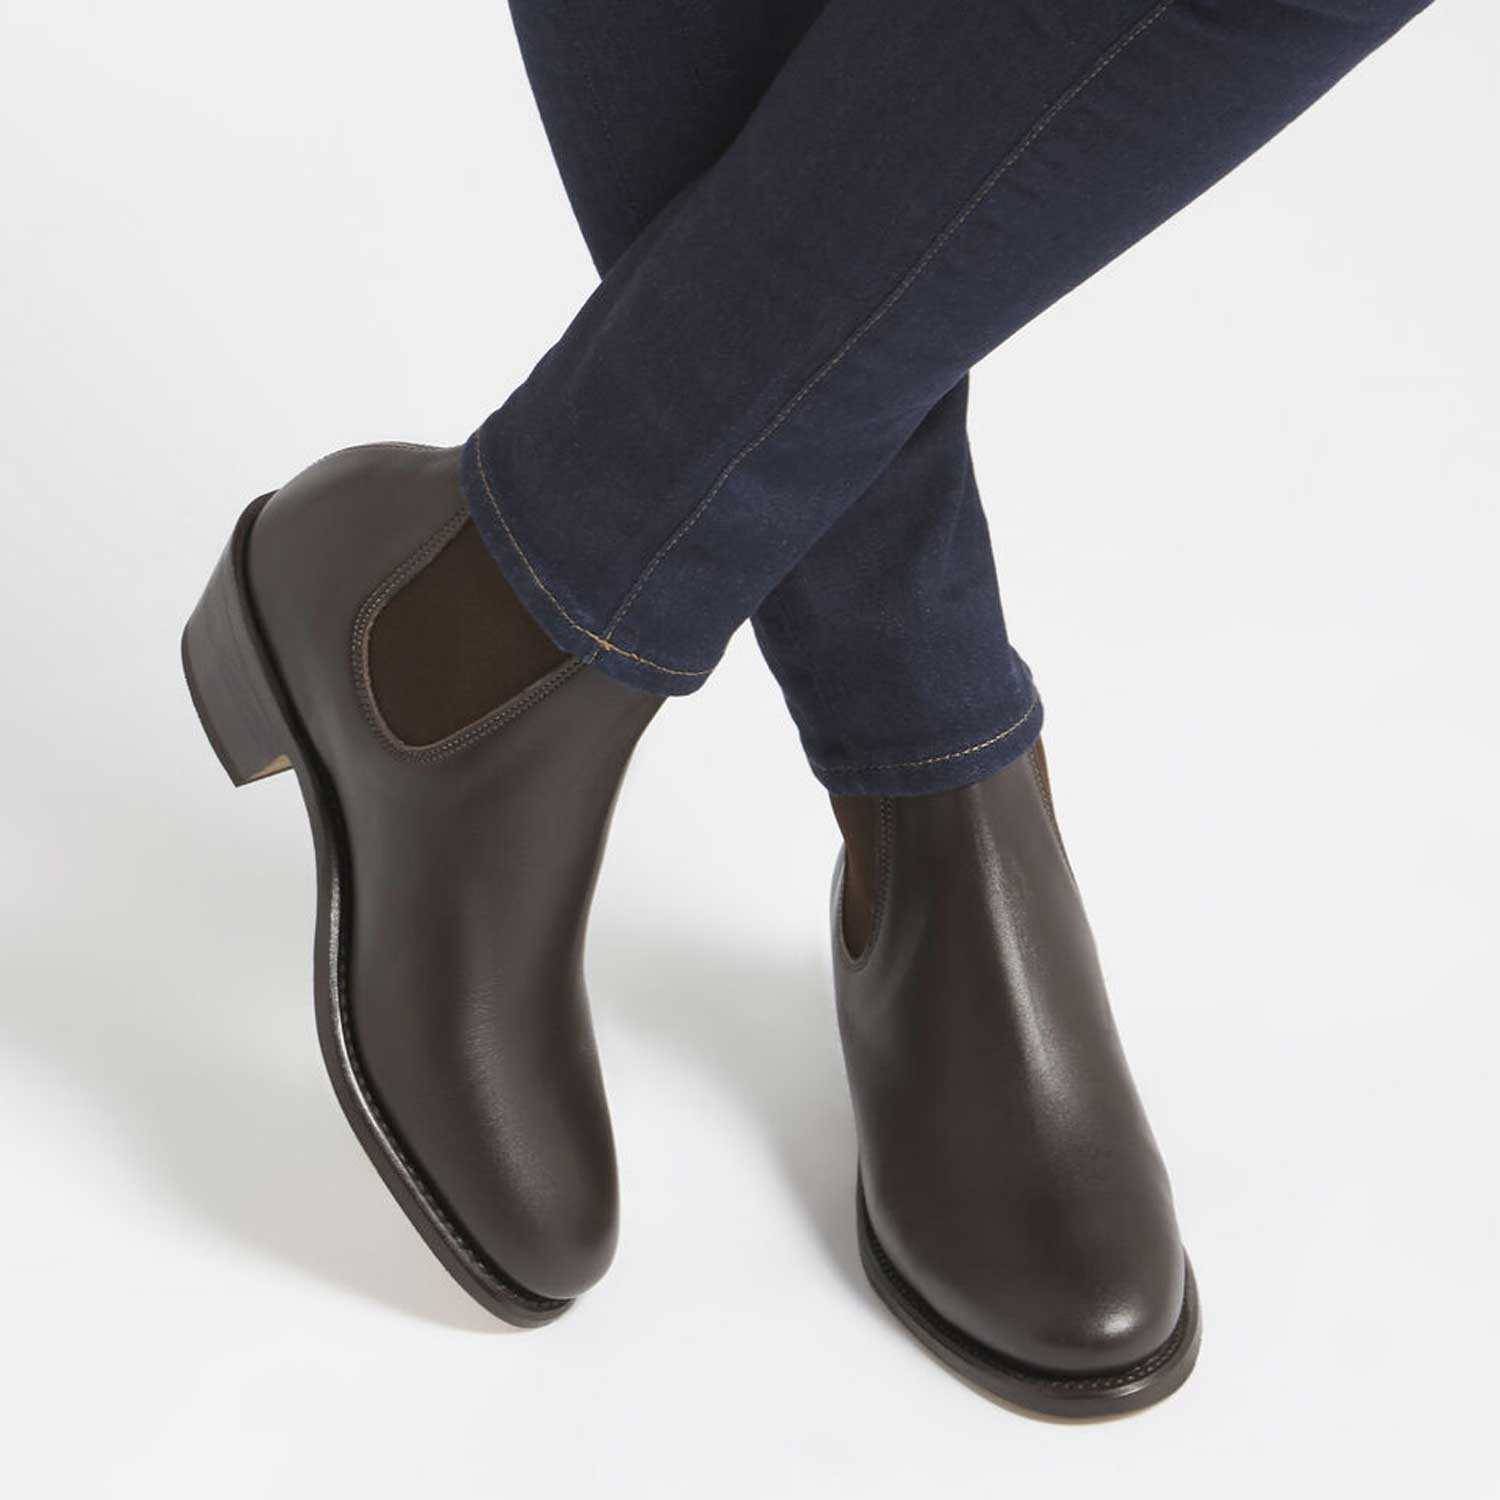 RM WILLIAMS Boots - Ladies Adelaide Cuban Heel - Chestnut